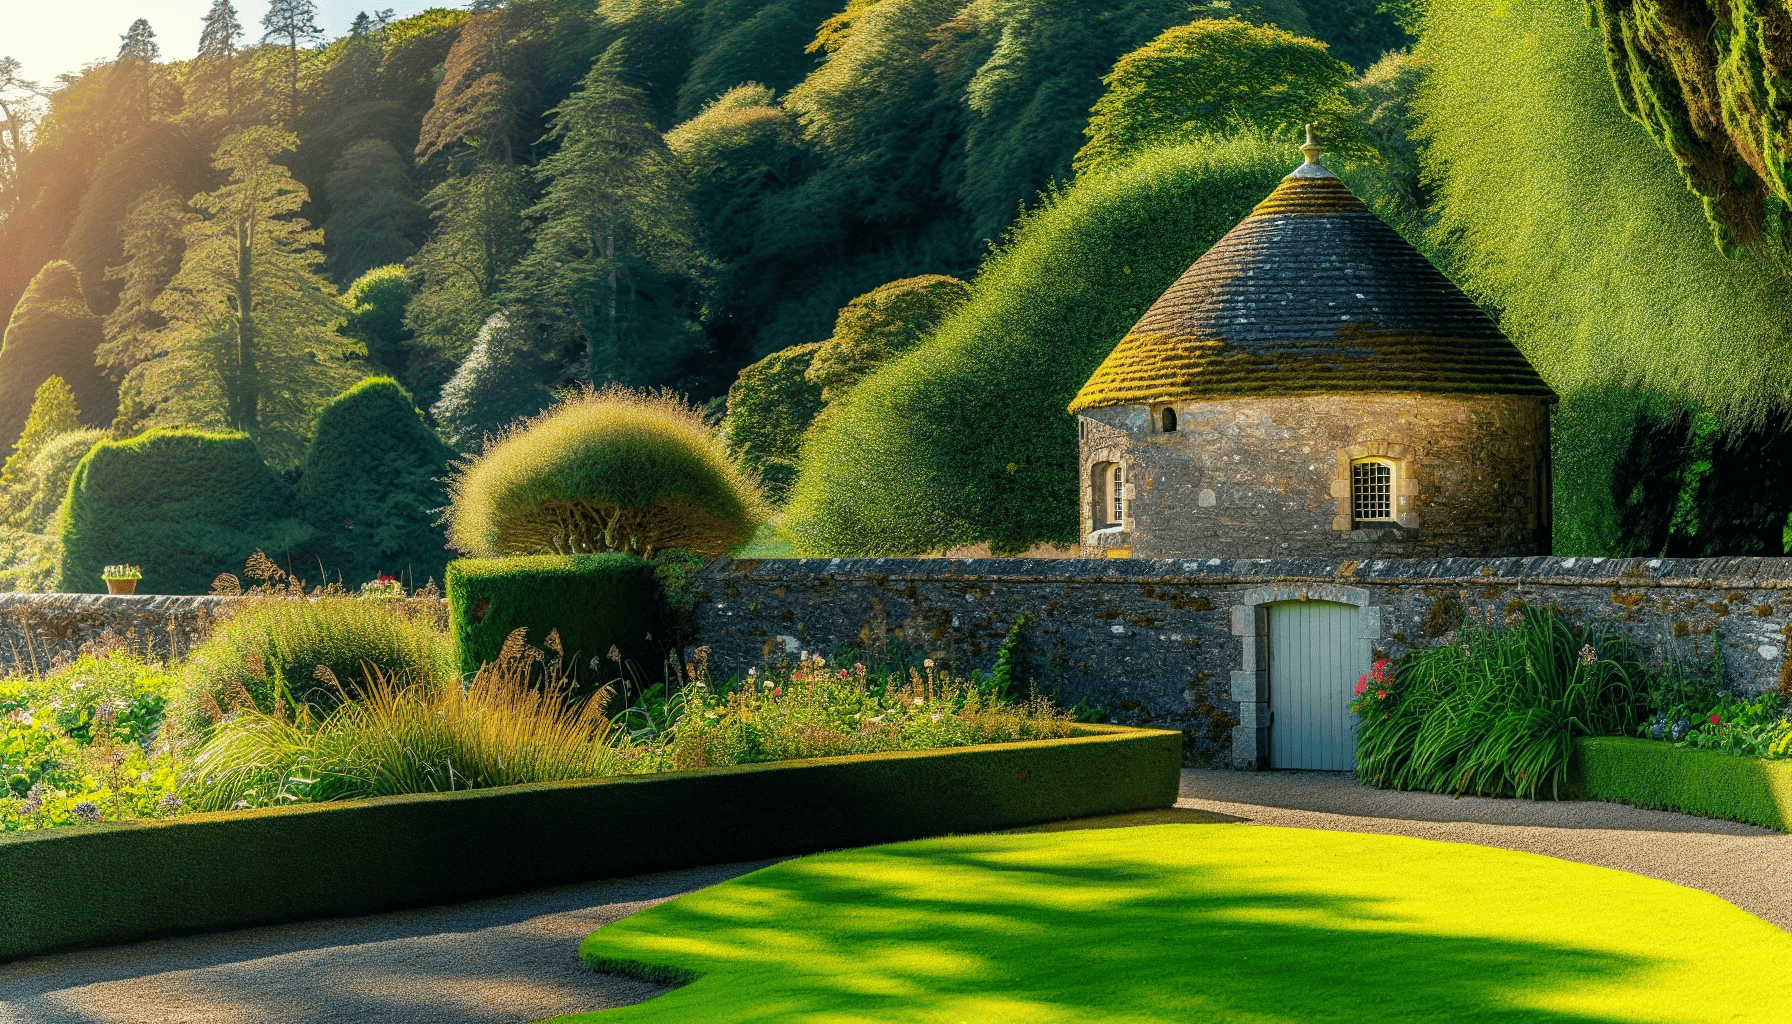 Historic Old Mushroom House in the Walled Garden at Glenarm Castle